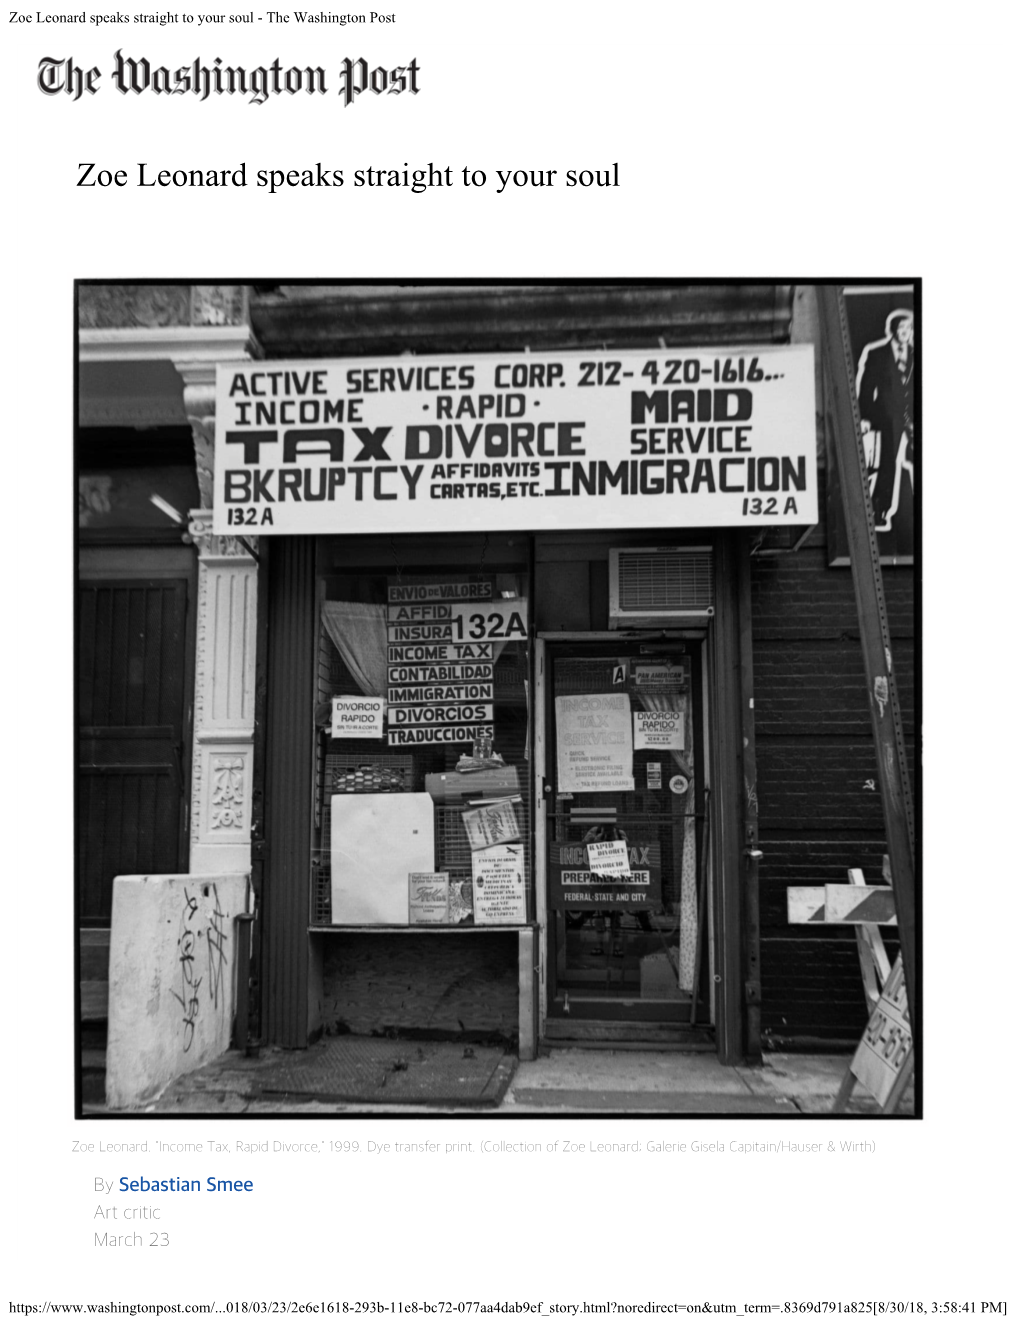 Zoe Leonard Speaks Straight to Your Soul - the Washington Post